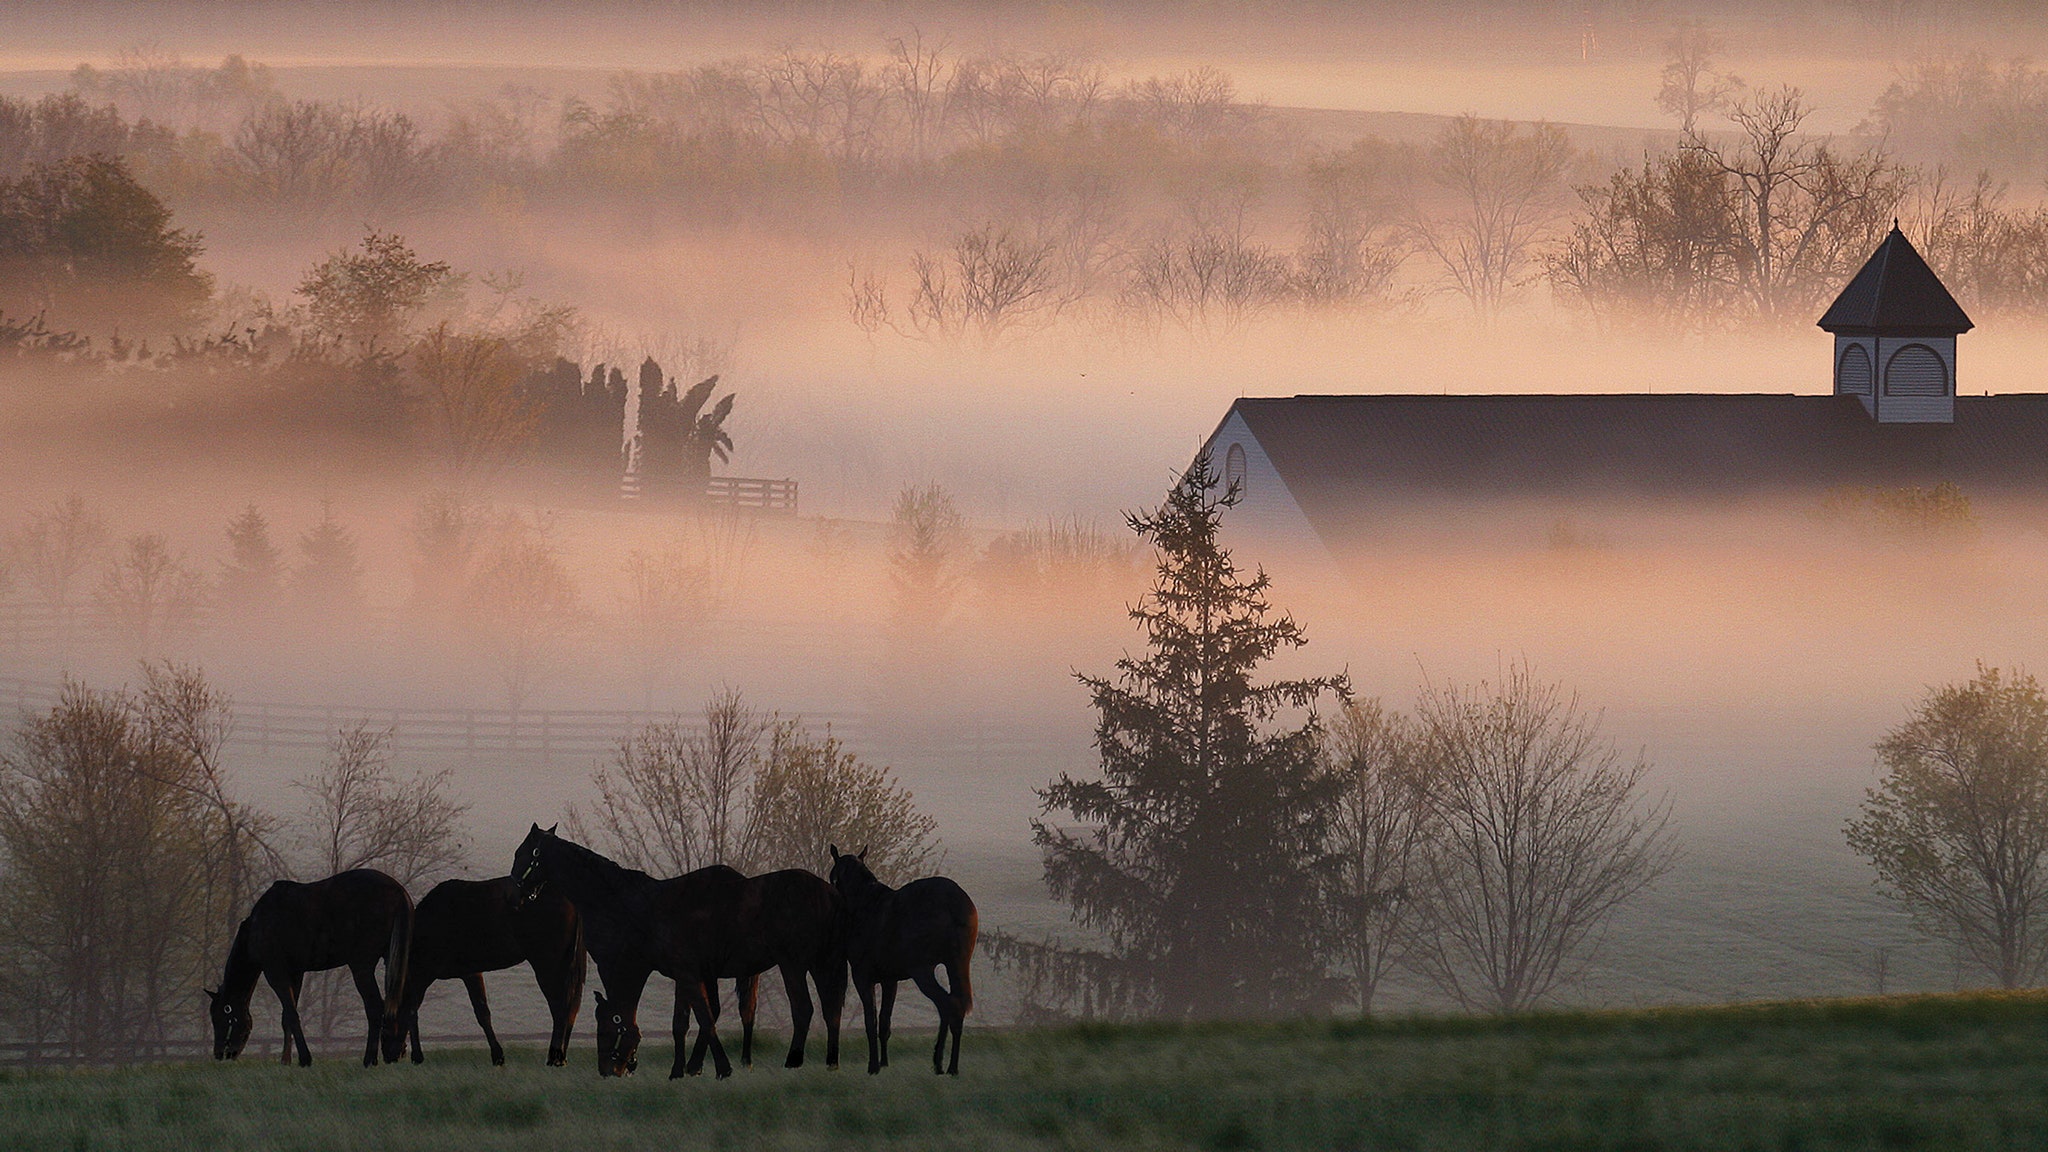 Foggy-Horse-Farm-cr-Gene-Burch-courtesy-VisitLEX.jpg